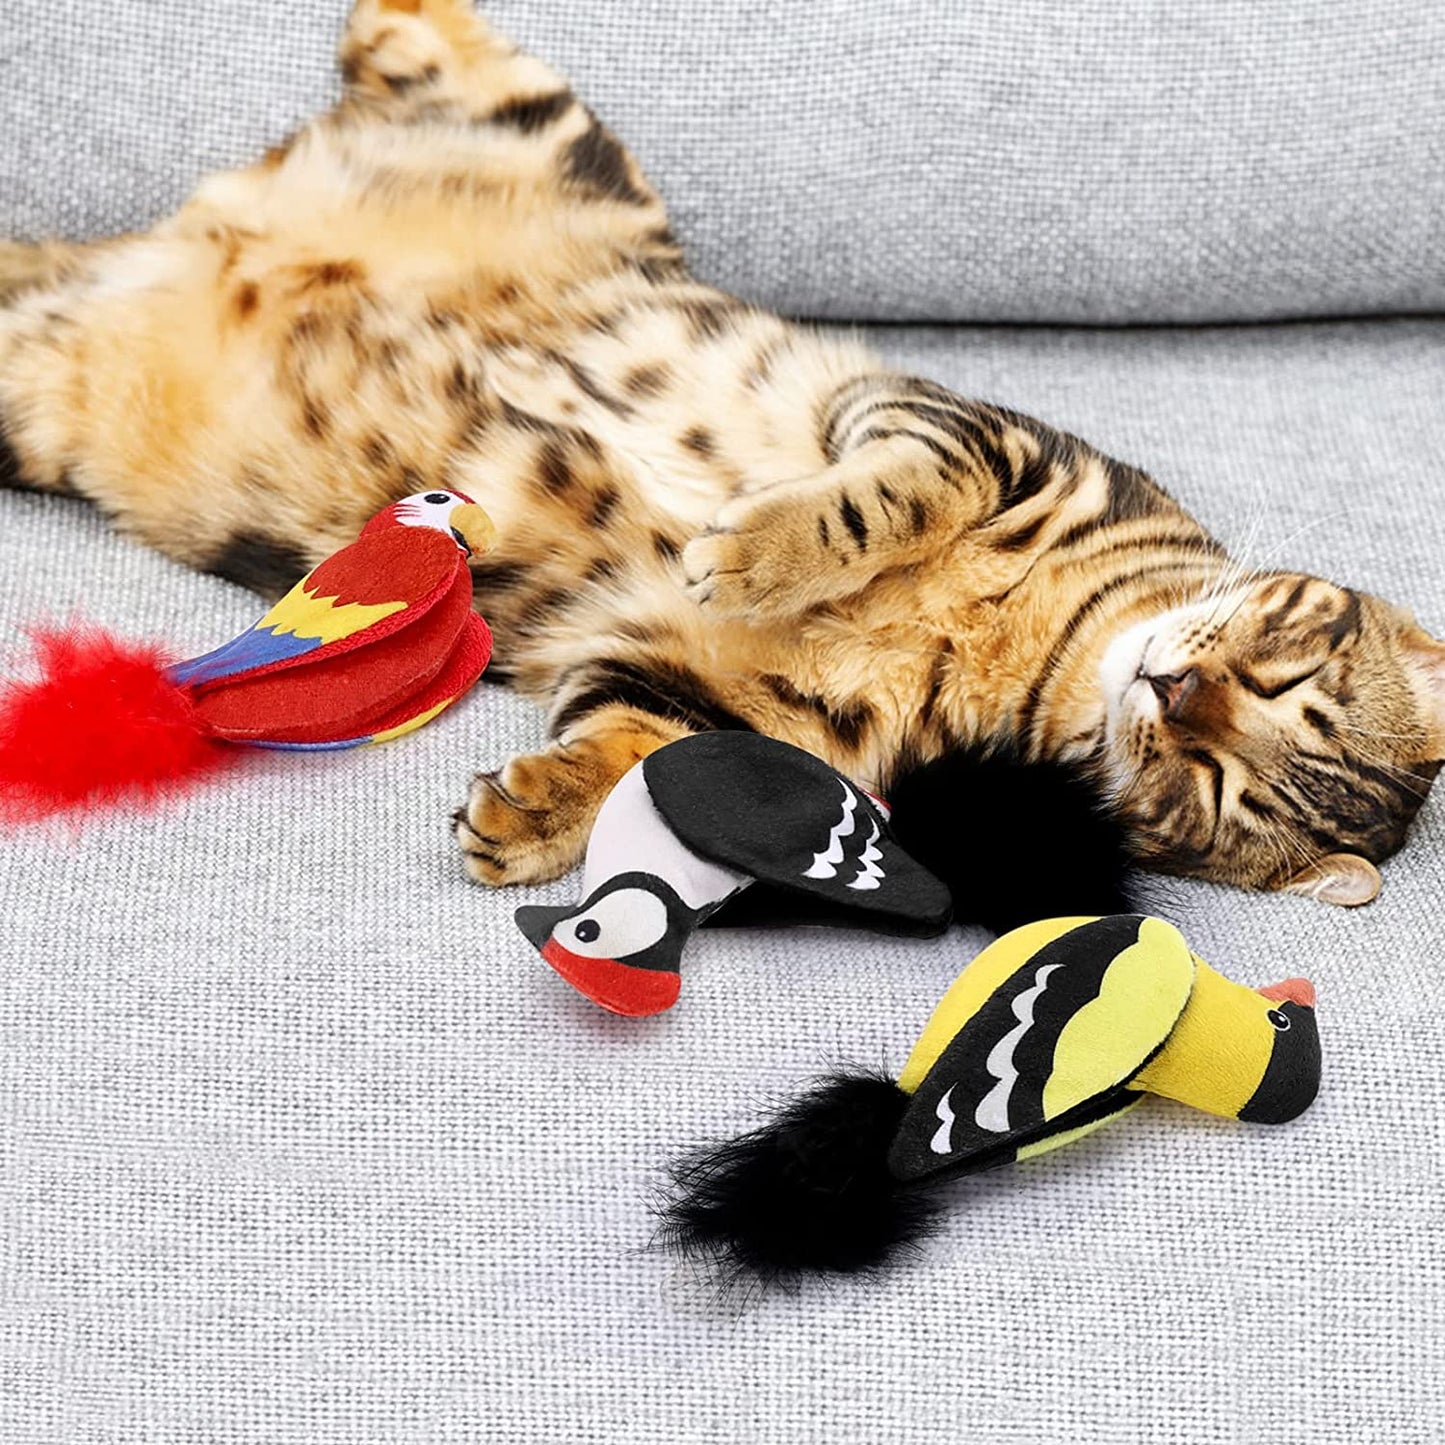 Parrot Birds Cat Toys 3PCS | momhomedecor